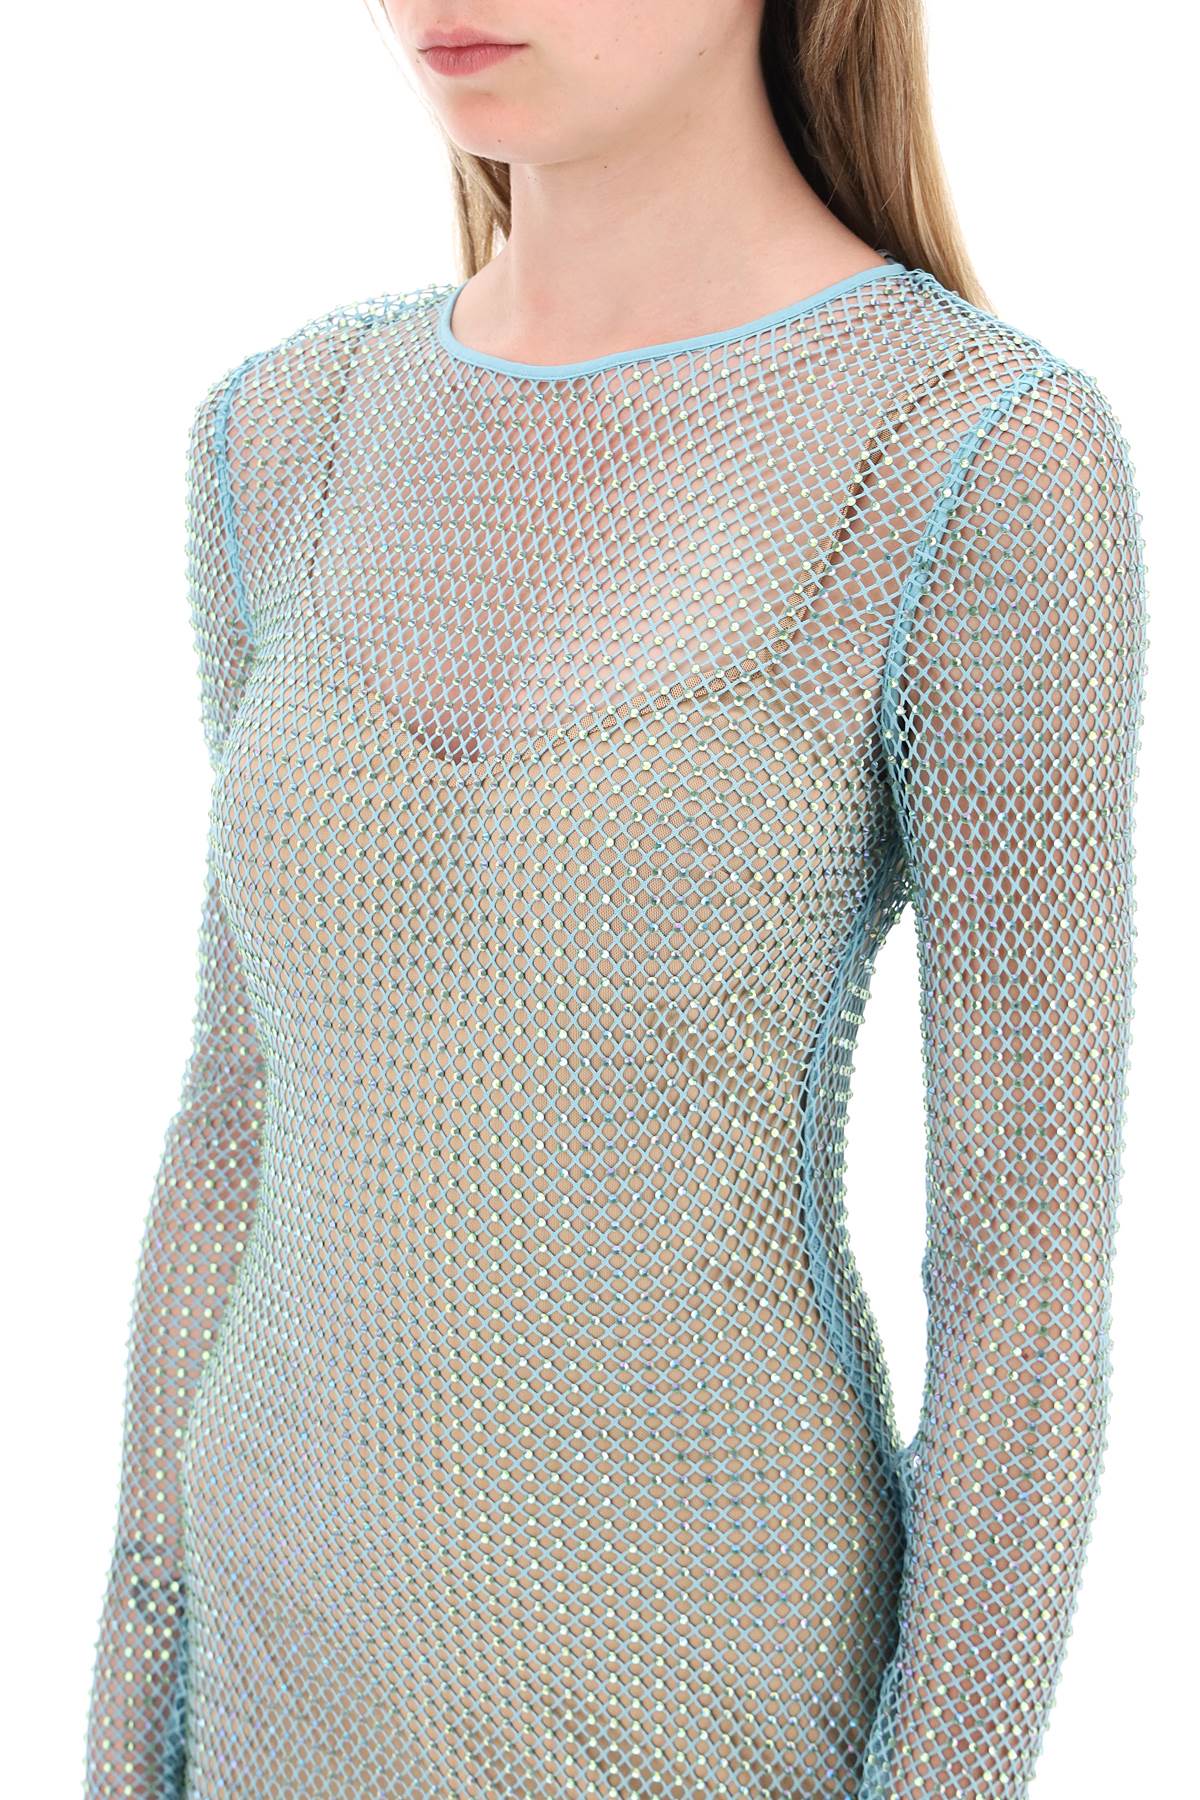 Self portrait maxi dress in fishnet with rhinestones-3